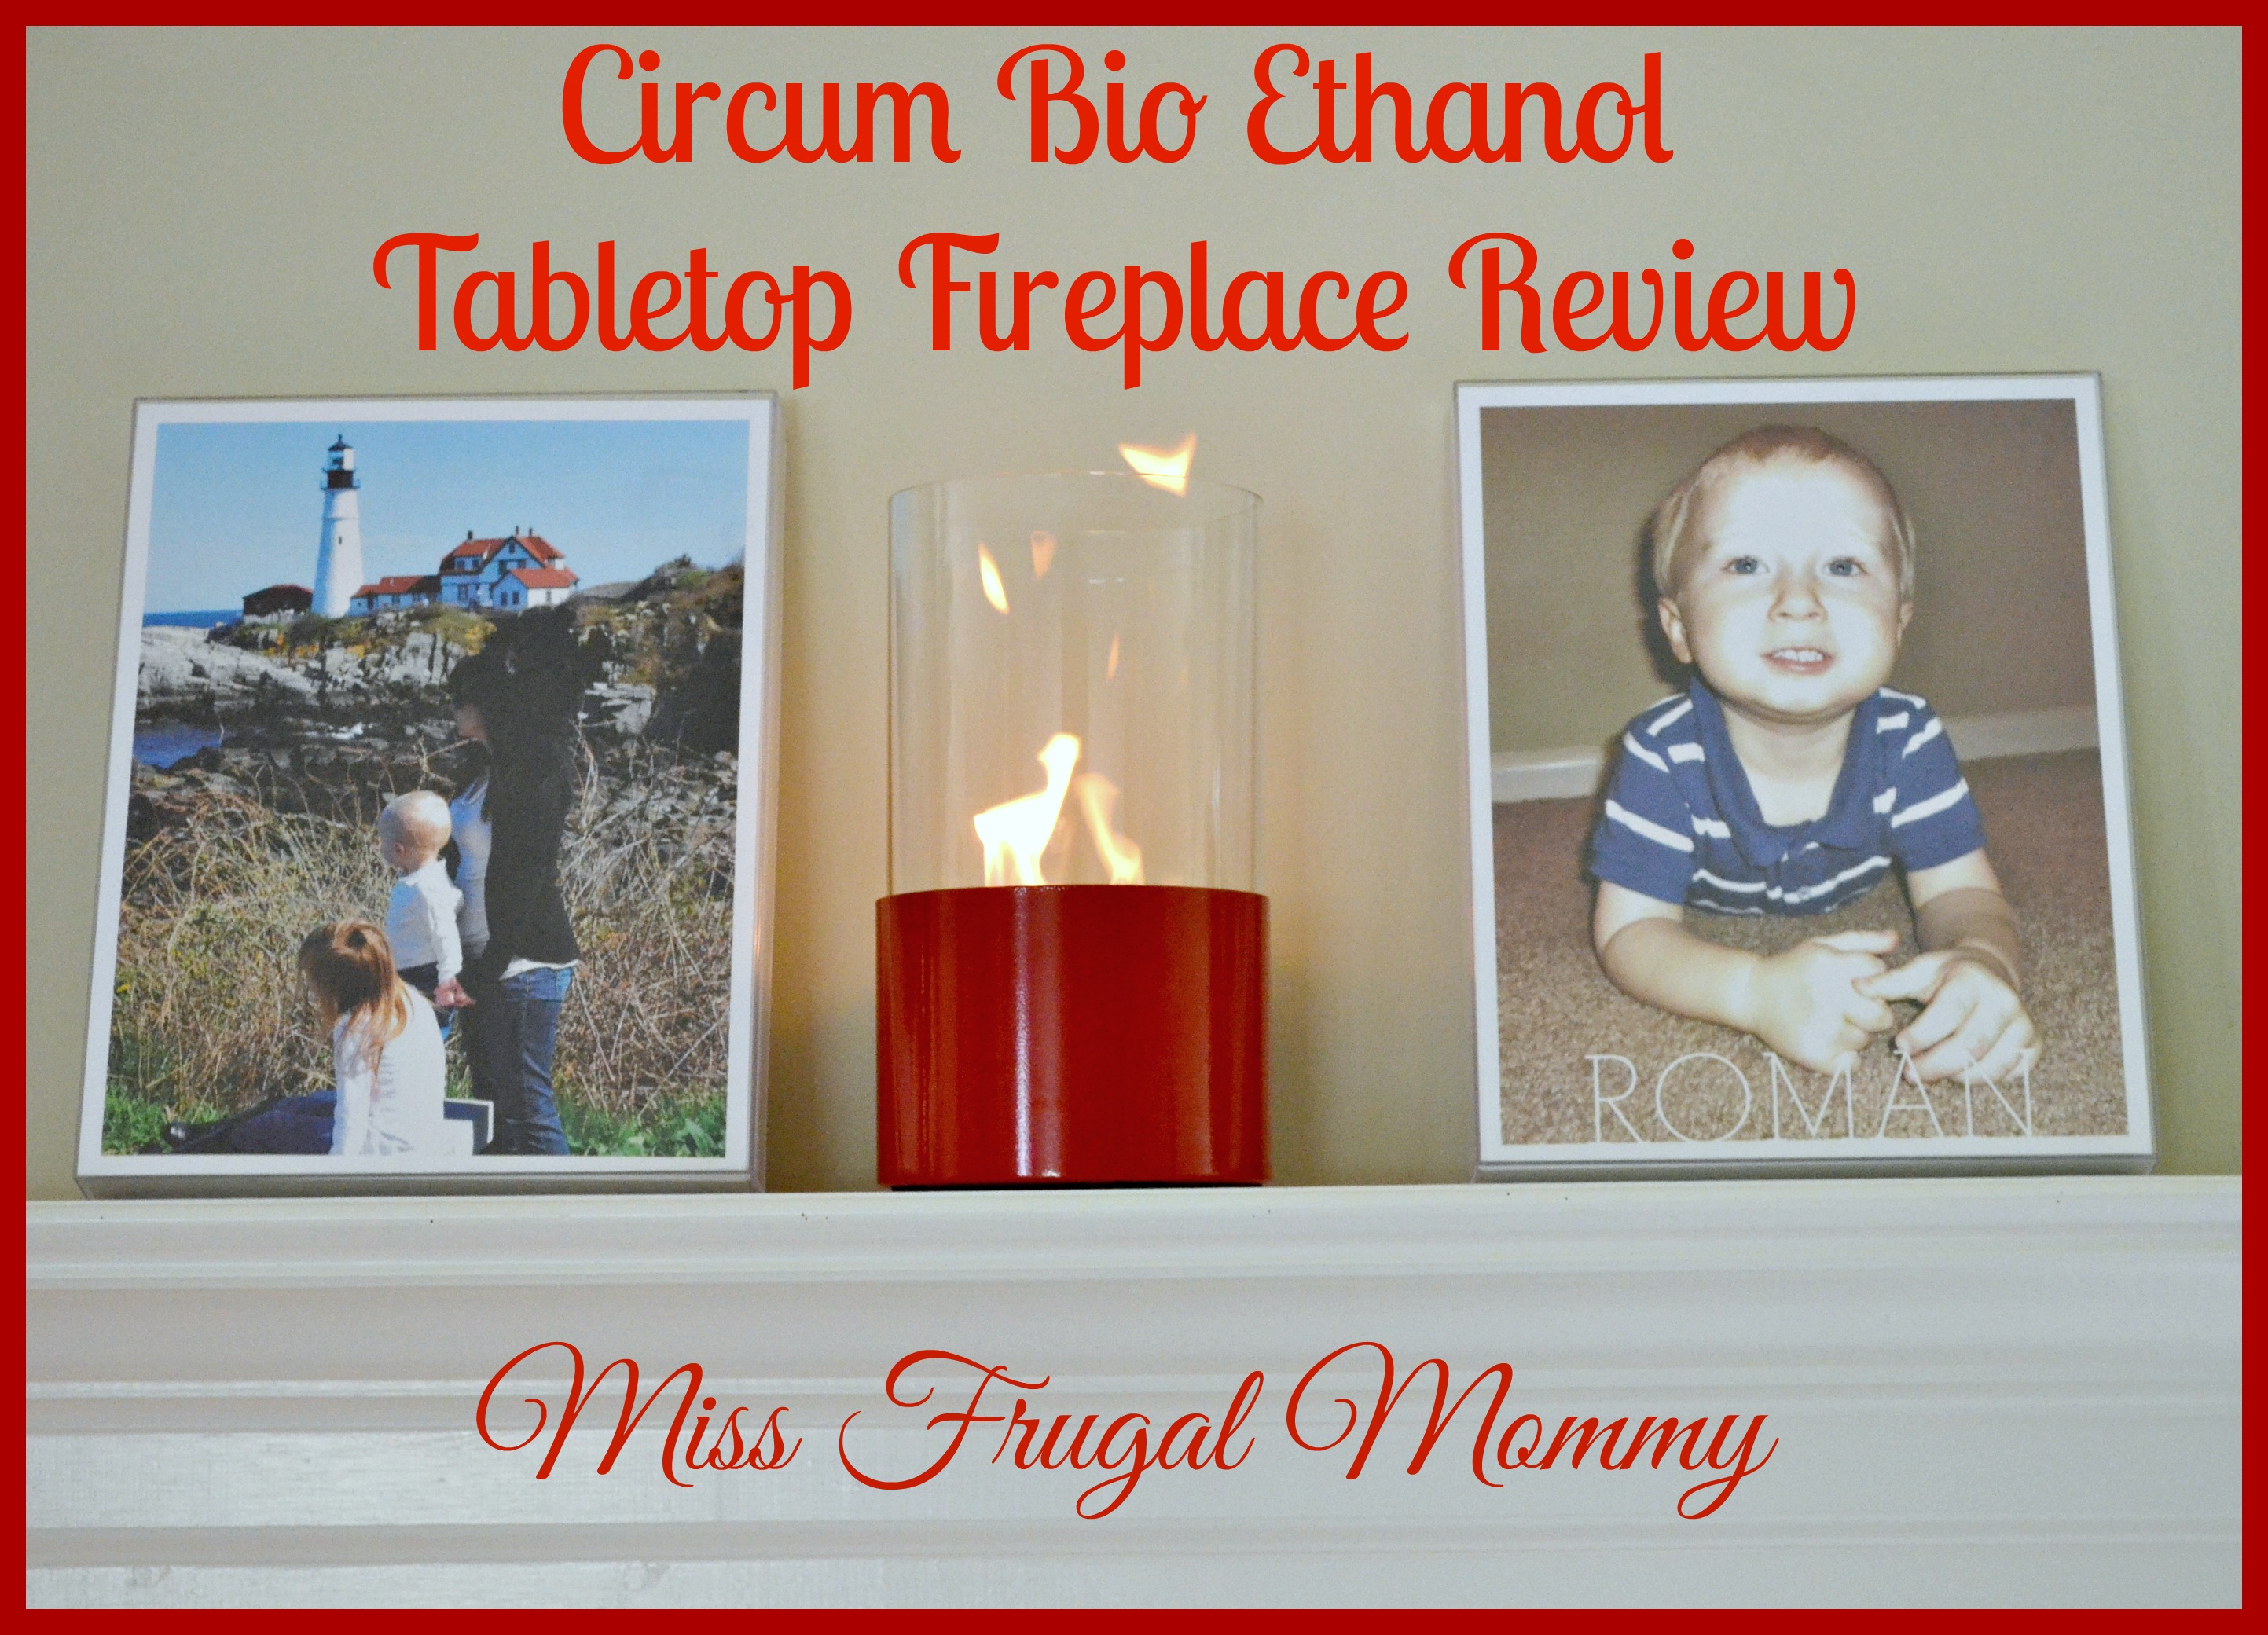 Circum Bio Ethanol Tabletop Fireplace Review